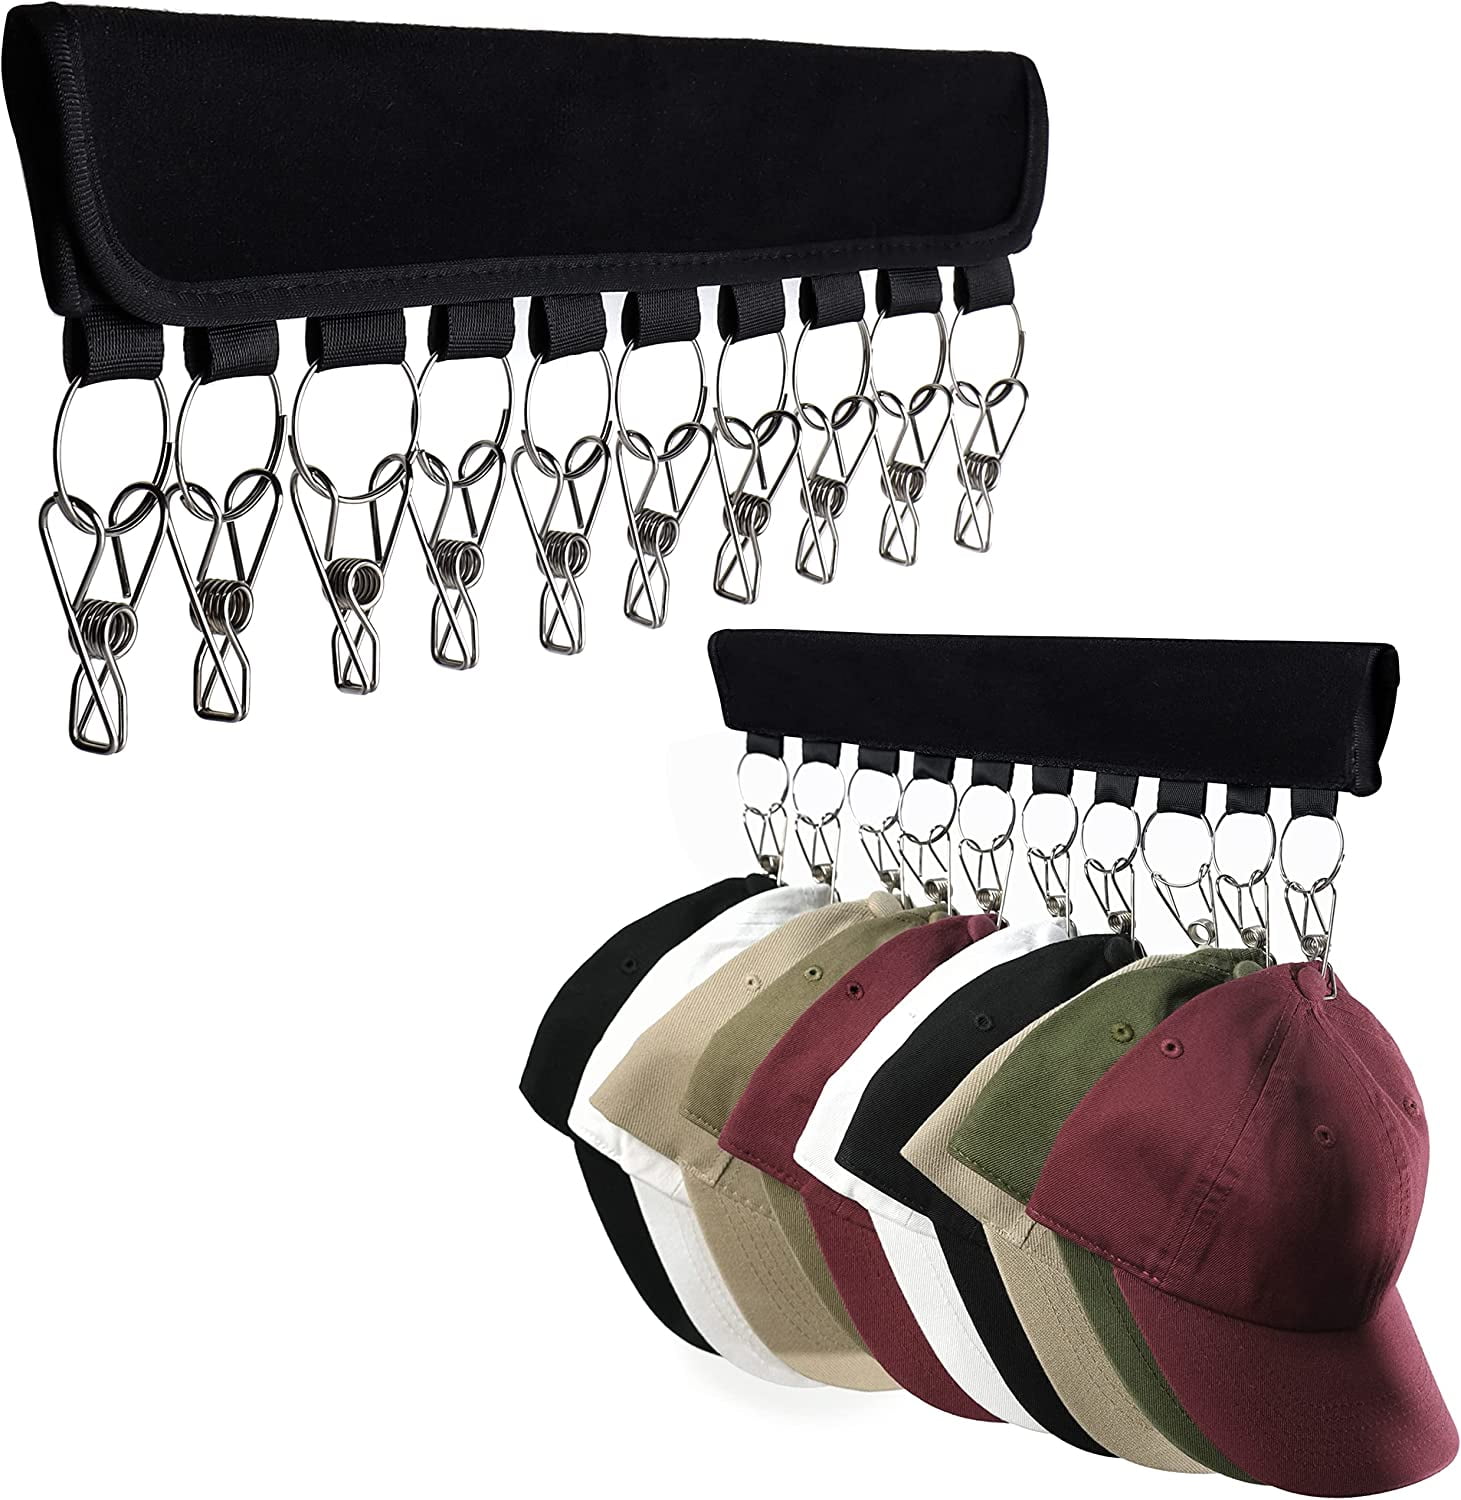 Hat Rack for Baseball Caps, Hanging Hat Organizer Display Holder, Clip ...